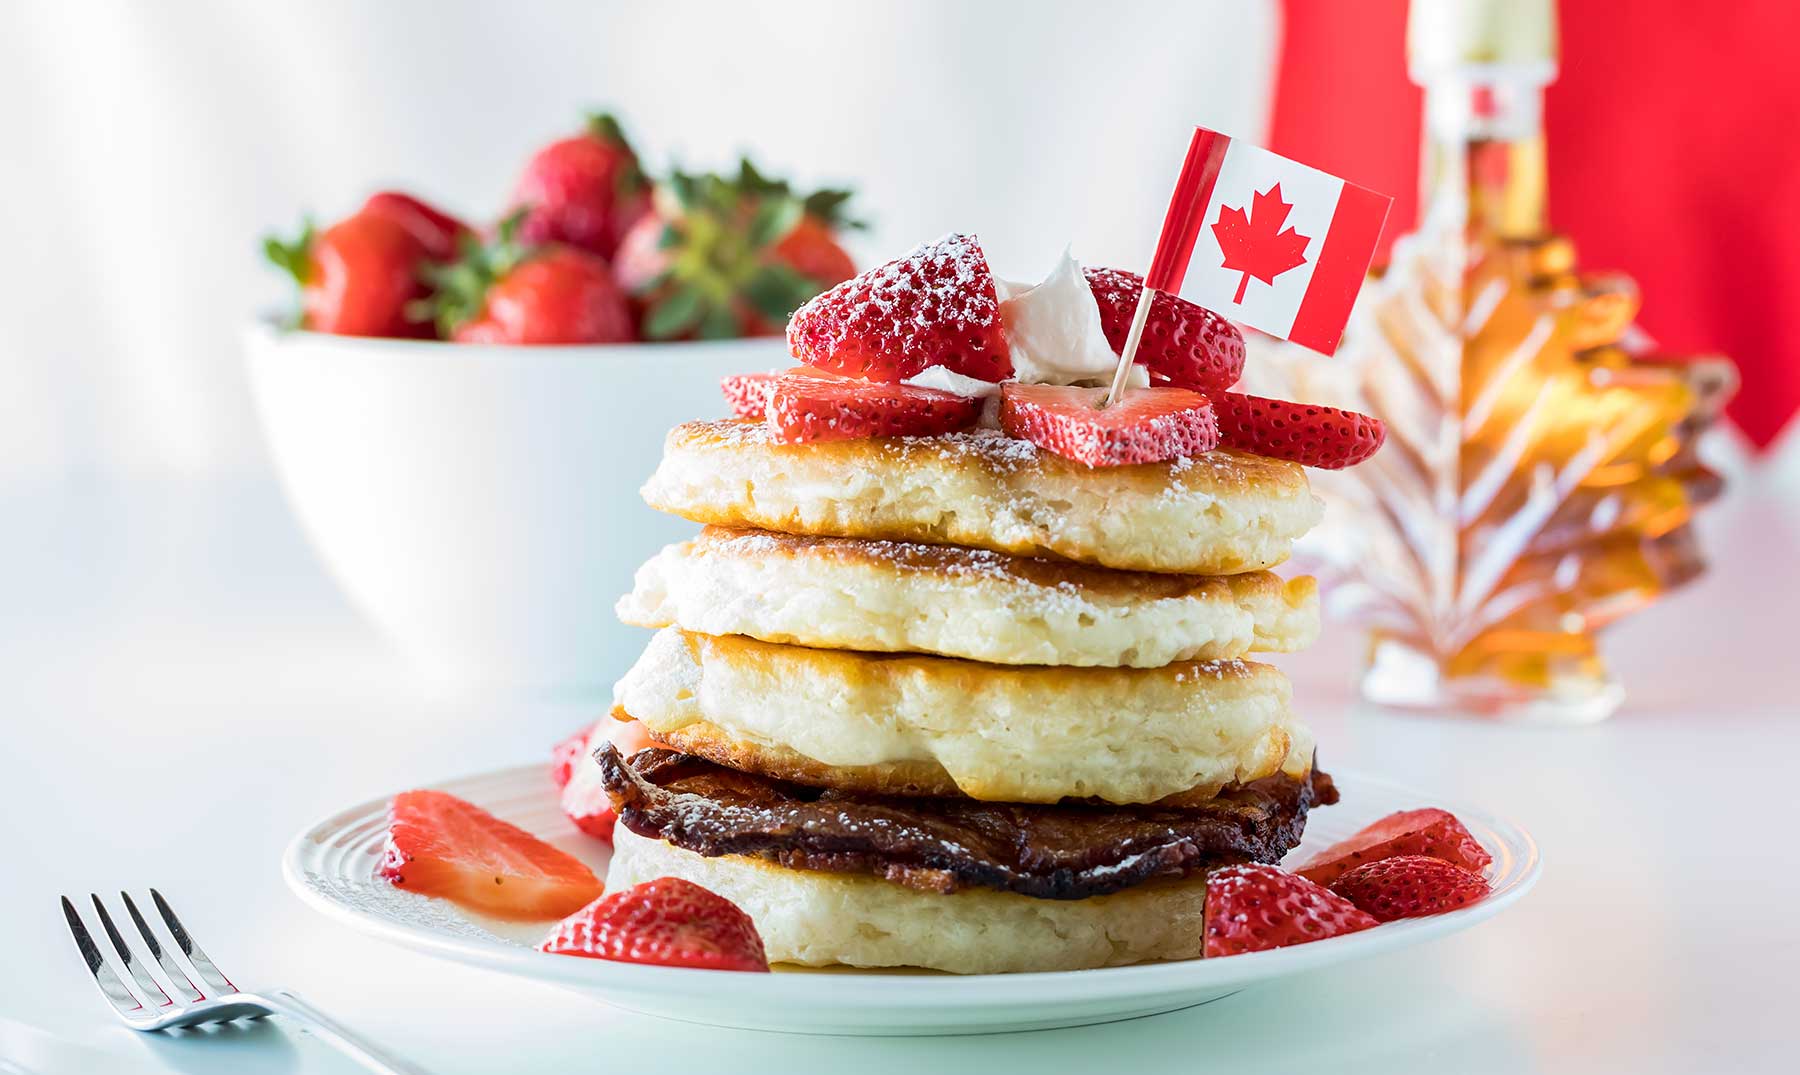 Comida típica de Canadá | ¡10 platos que conquistarán tu paladar! -  Experiencia Joven